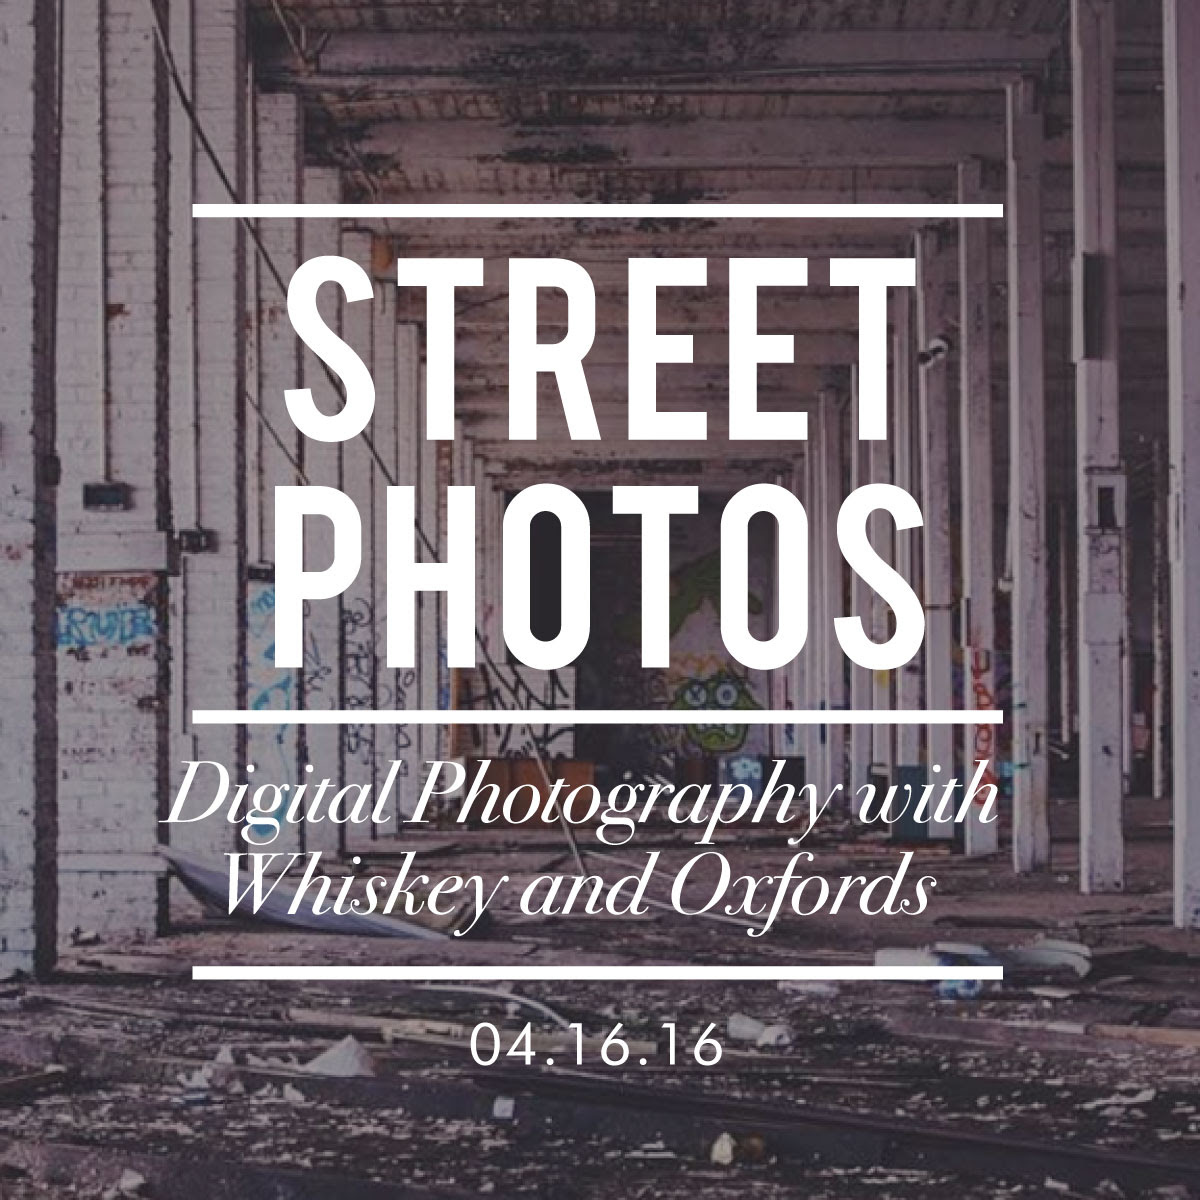 http://hartfordprints.com/shop/street-photography-digital-photography-whiskey-oxfords-april-16th-2016/?mc_cid=e3fc57dd49&mc_eid=533dfc0f22